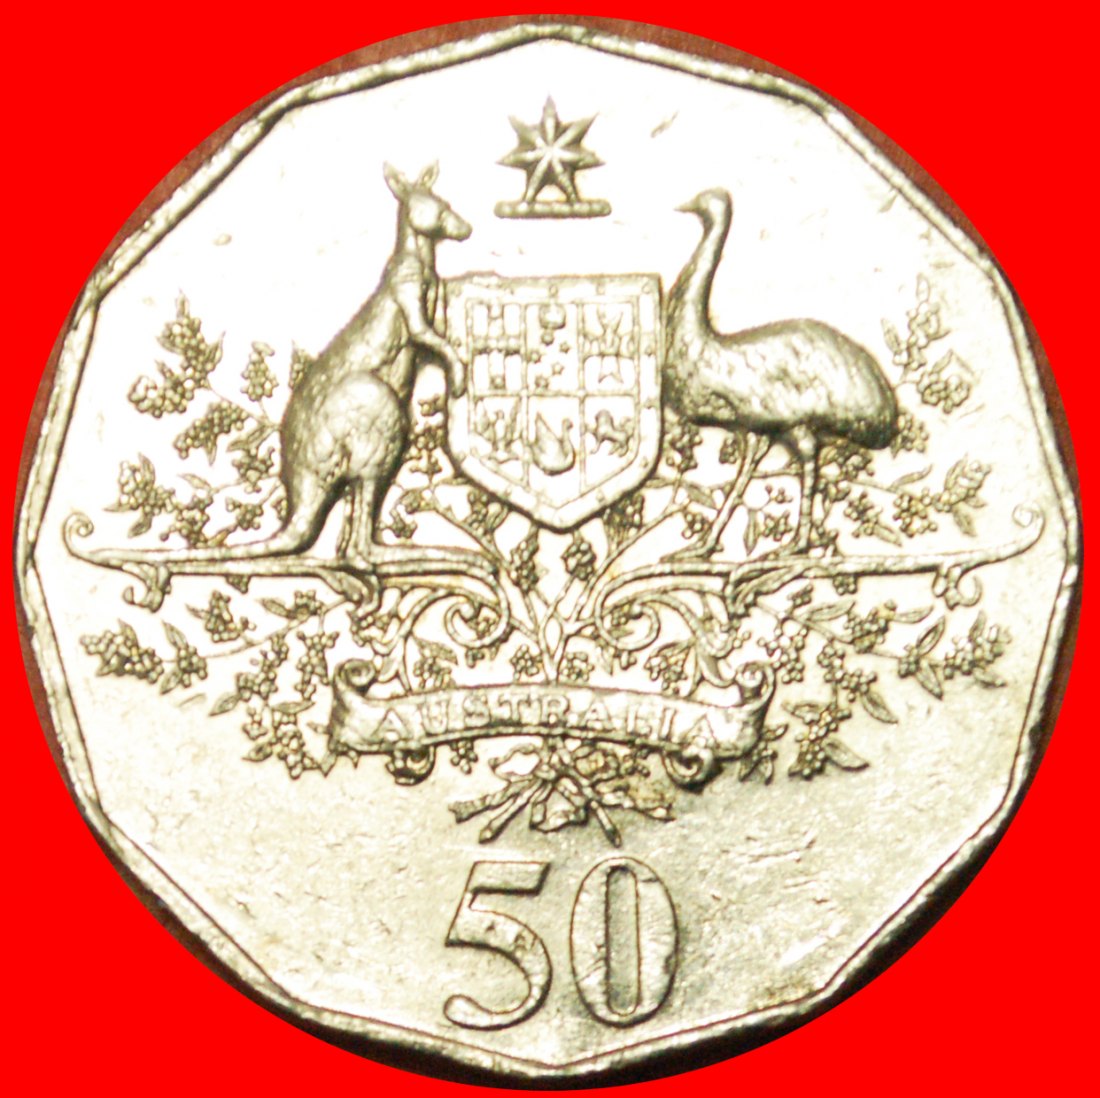  # FÖDERATION 1901: AUSTRALIEN ★ 50 CENTS 2001 DOPPELT STEMPEL! OHNE VORBEHALT!   